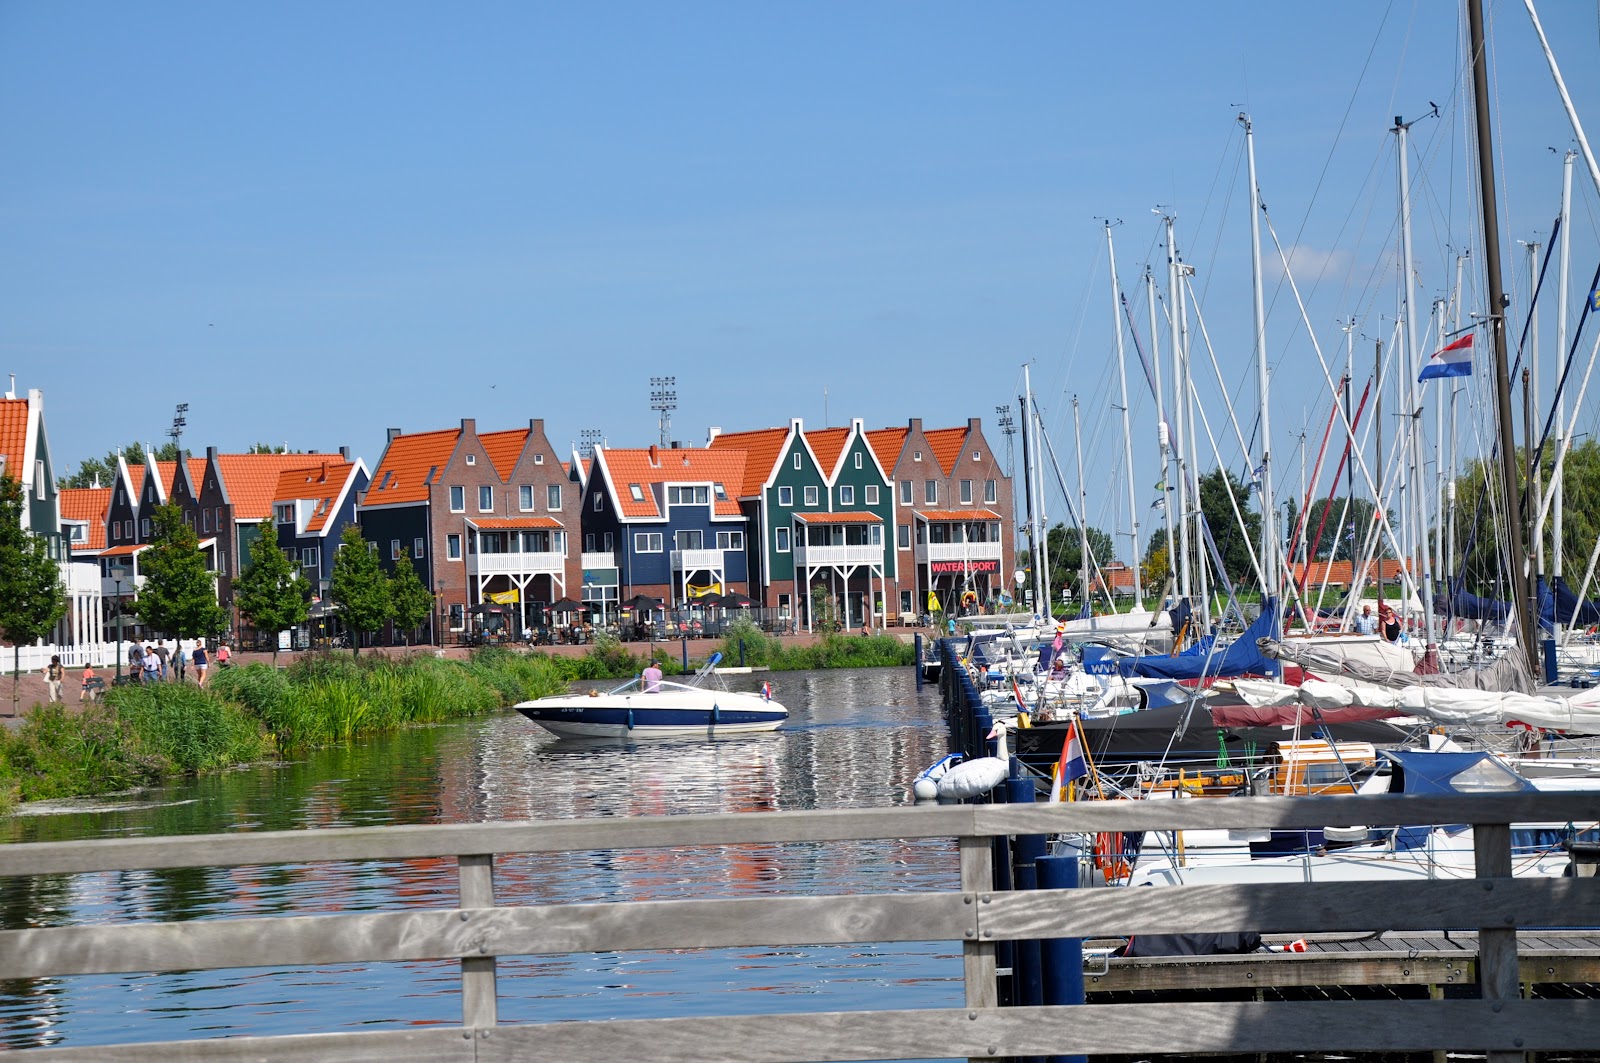 Photos of Volendam, Holland